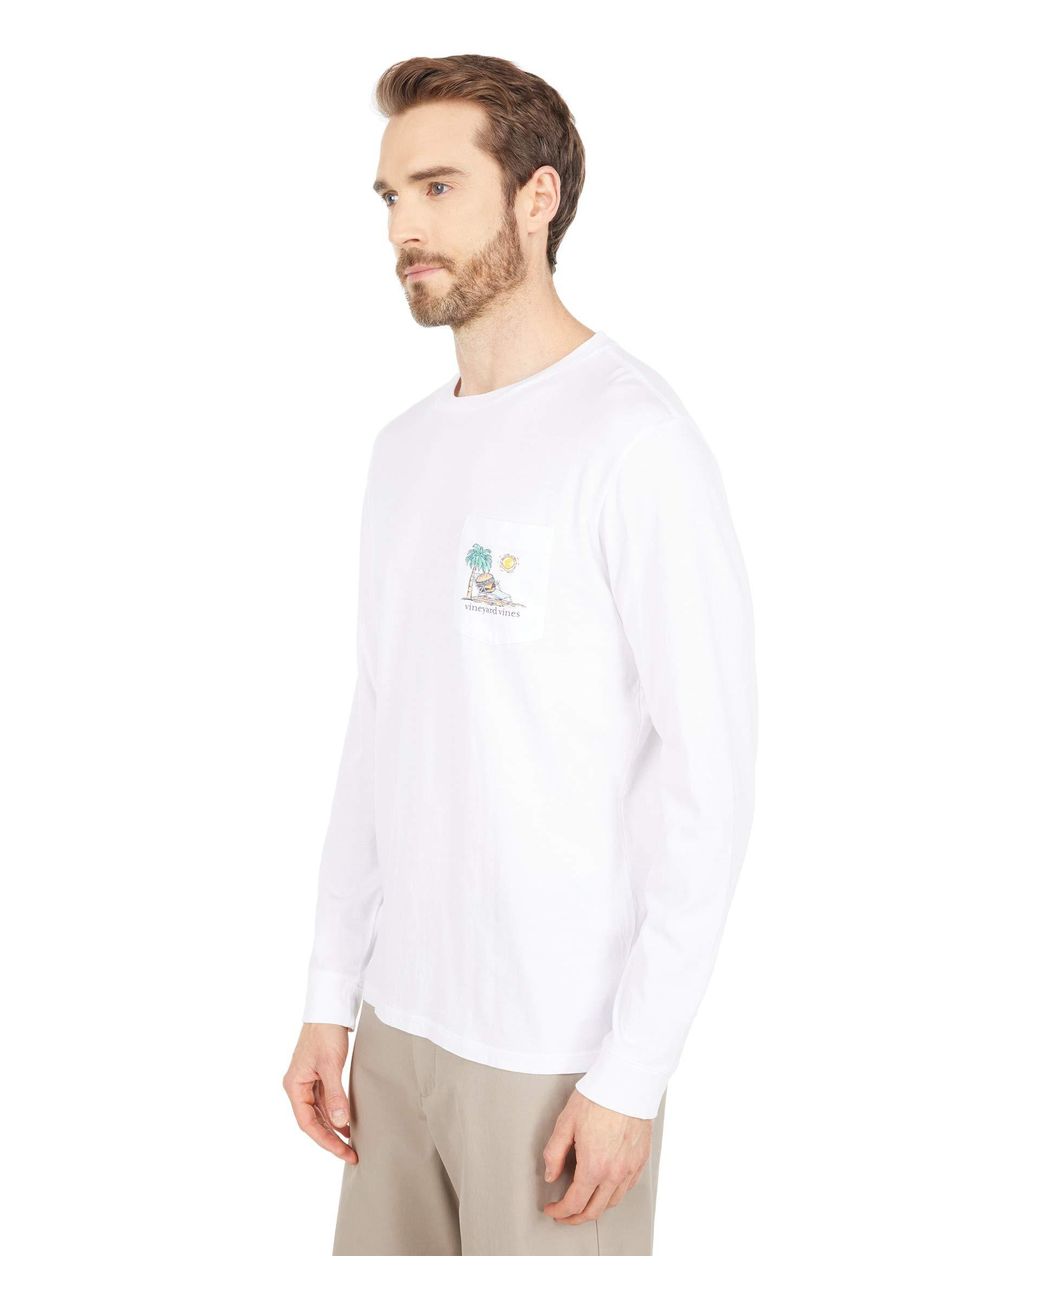 Vineyard Vines Shirt Men's S White Long Sleeve Crew Neck Pocket Tee Sailfish